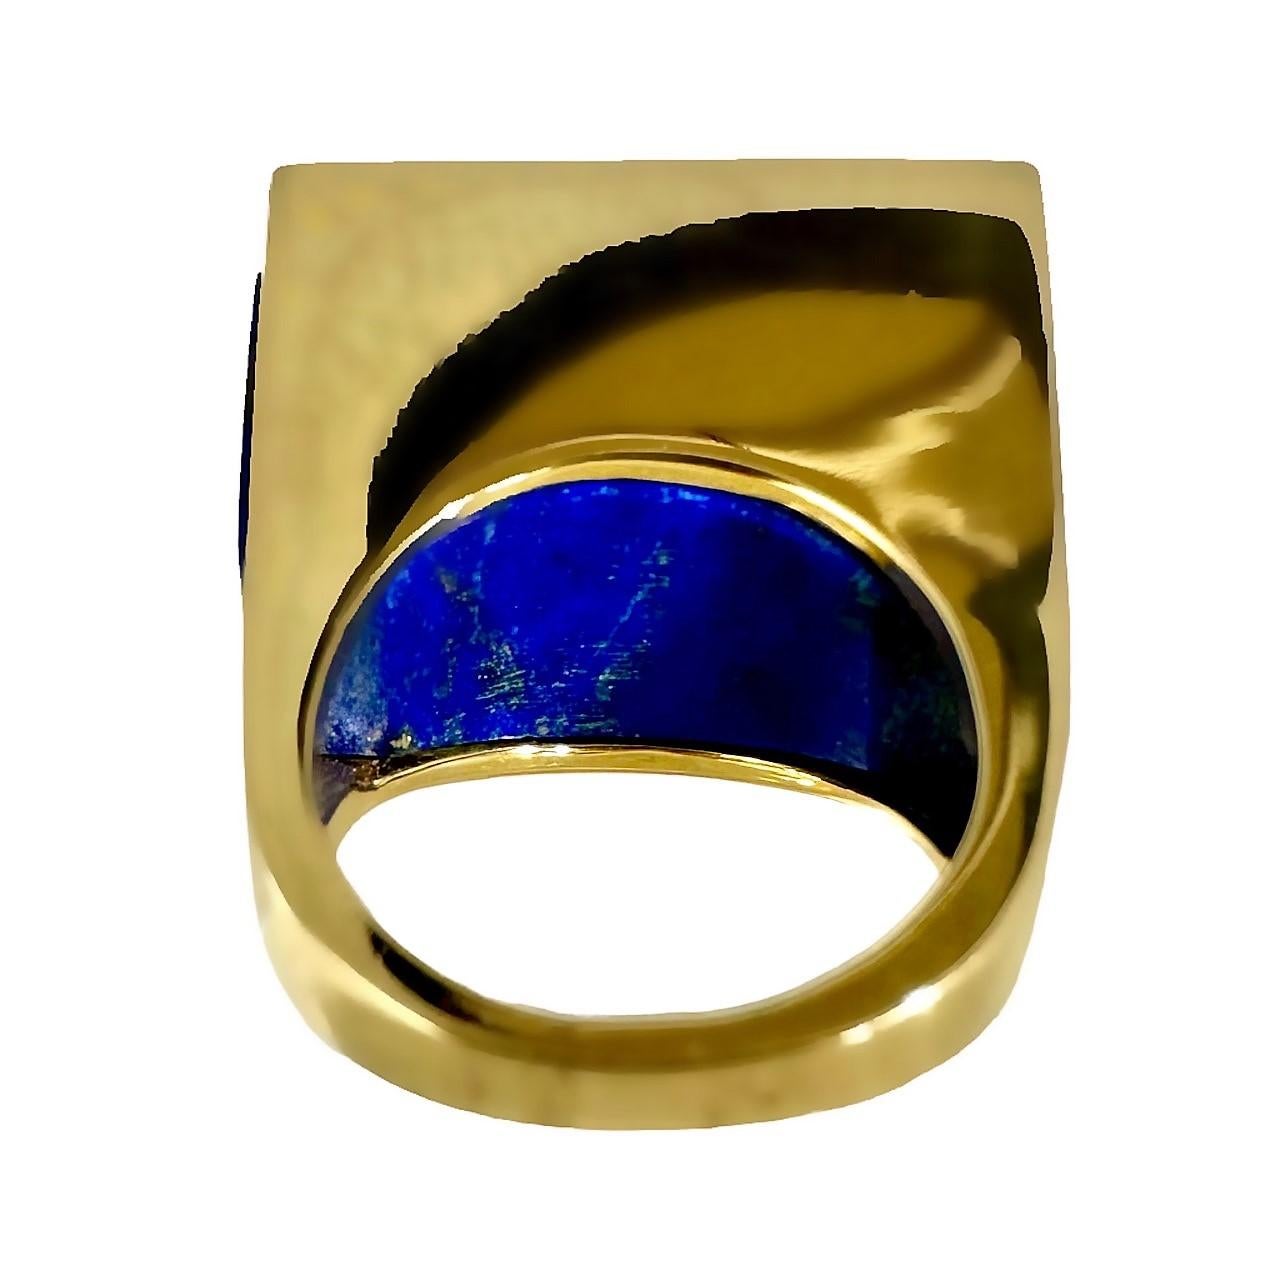 Brilliant Cut Stunning, Large Scale, Mid-20th Century 14k Gold, Lapis-Lazuli and Diamond Ring